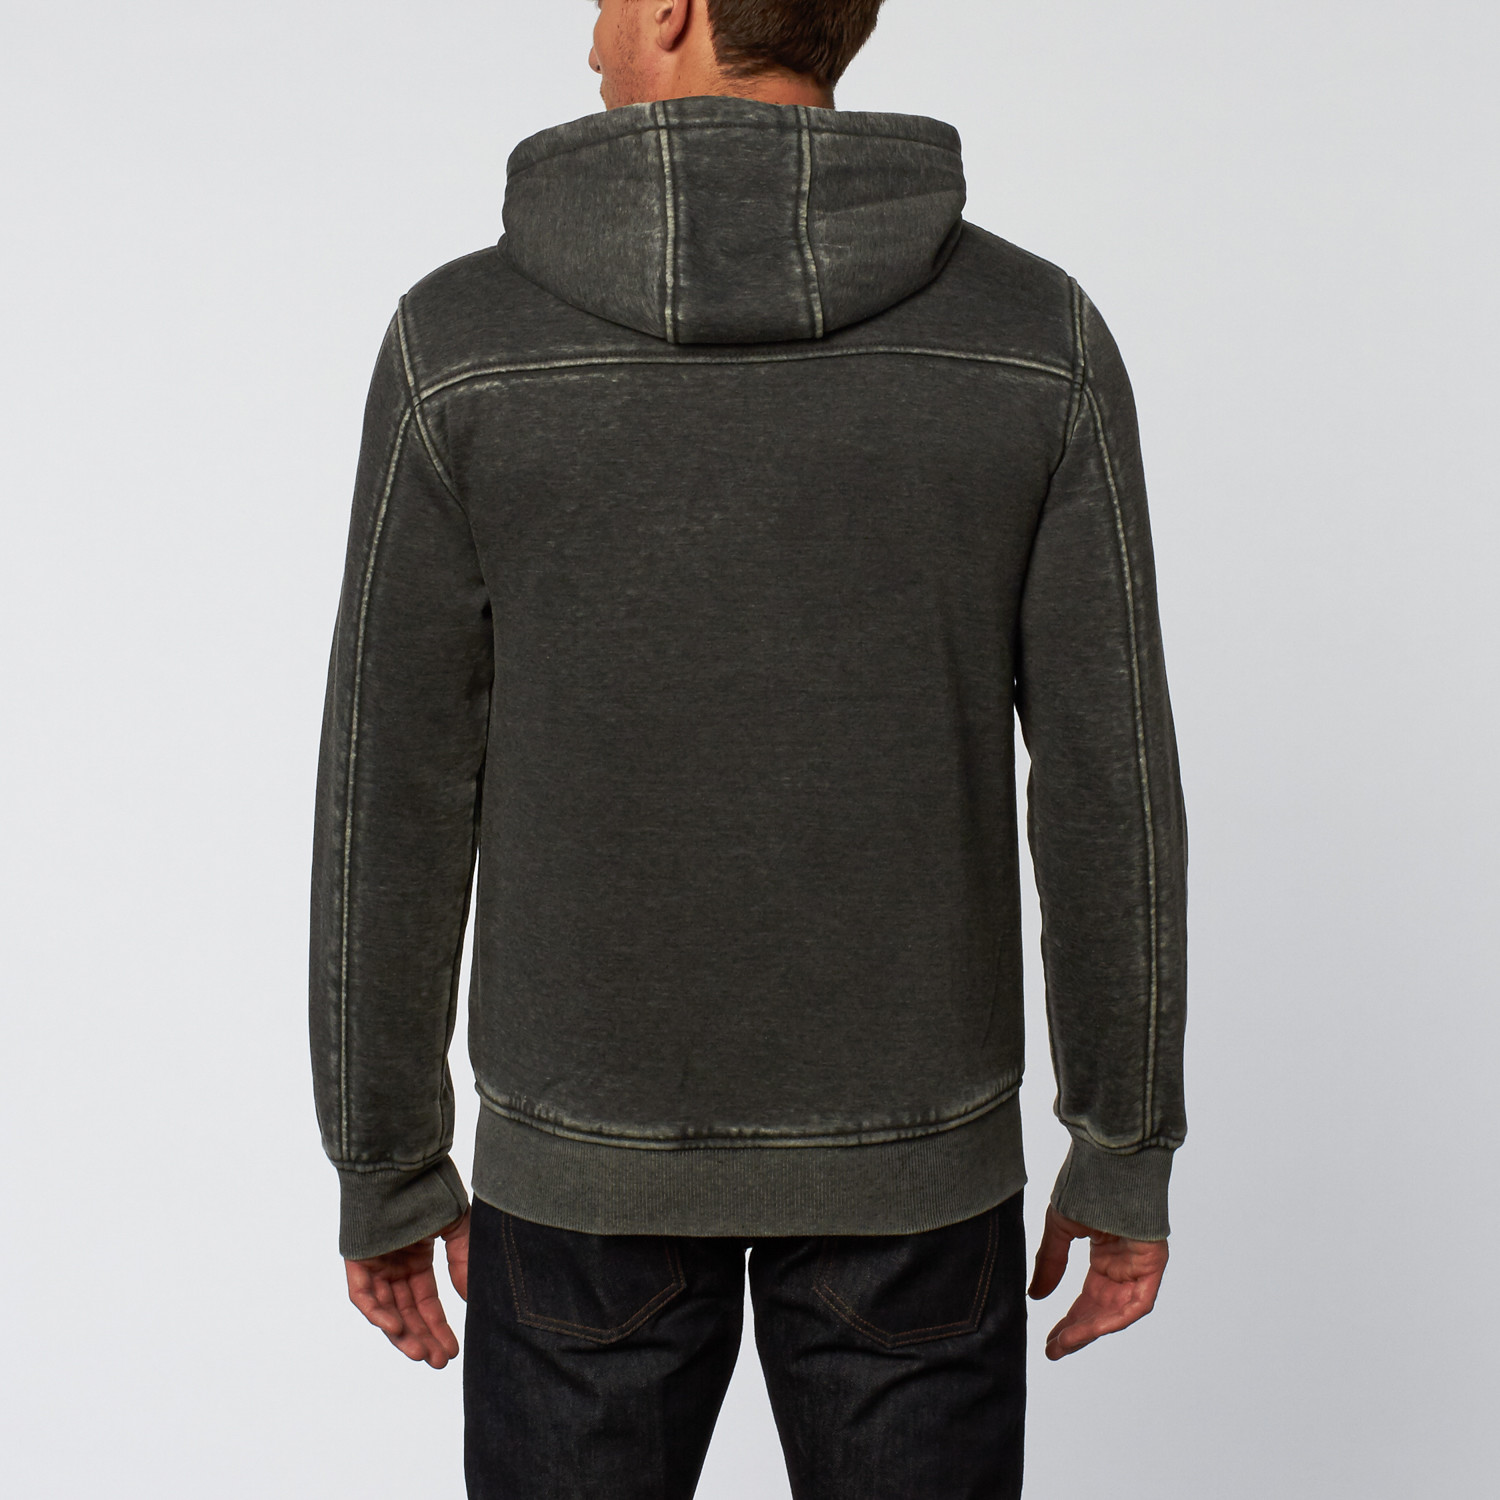 Burnout Fleece Zip-Up Sweater // Black (S) - X Ray Jeans ...